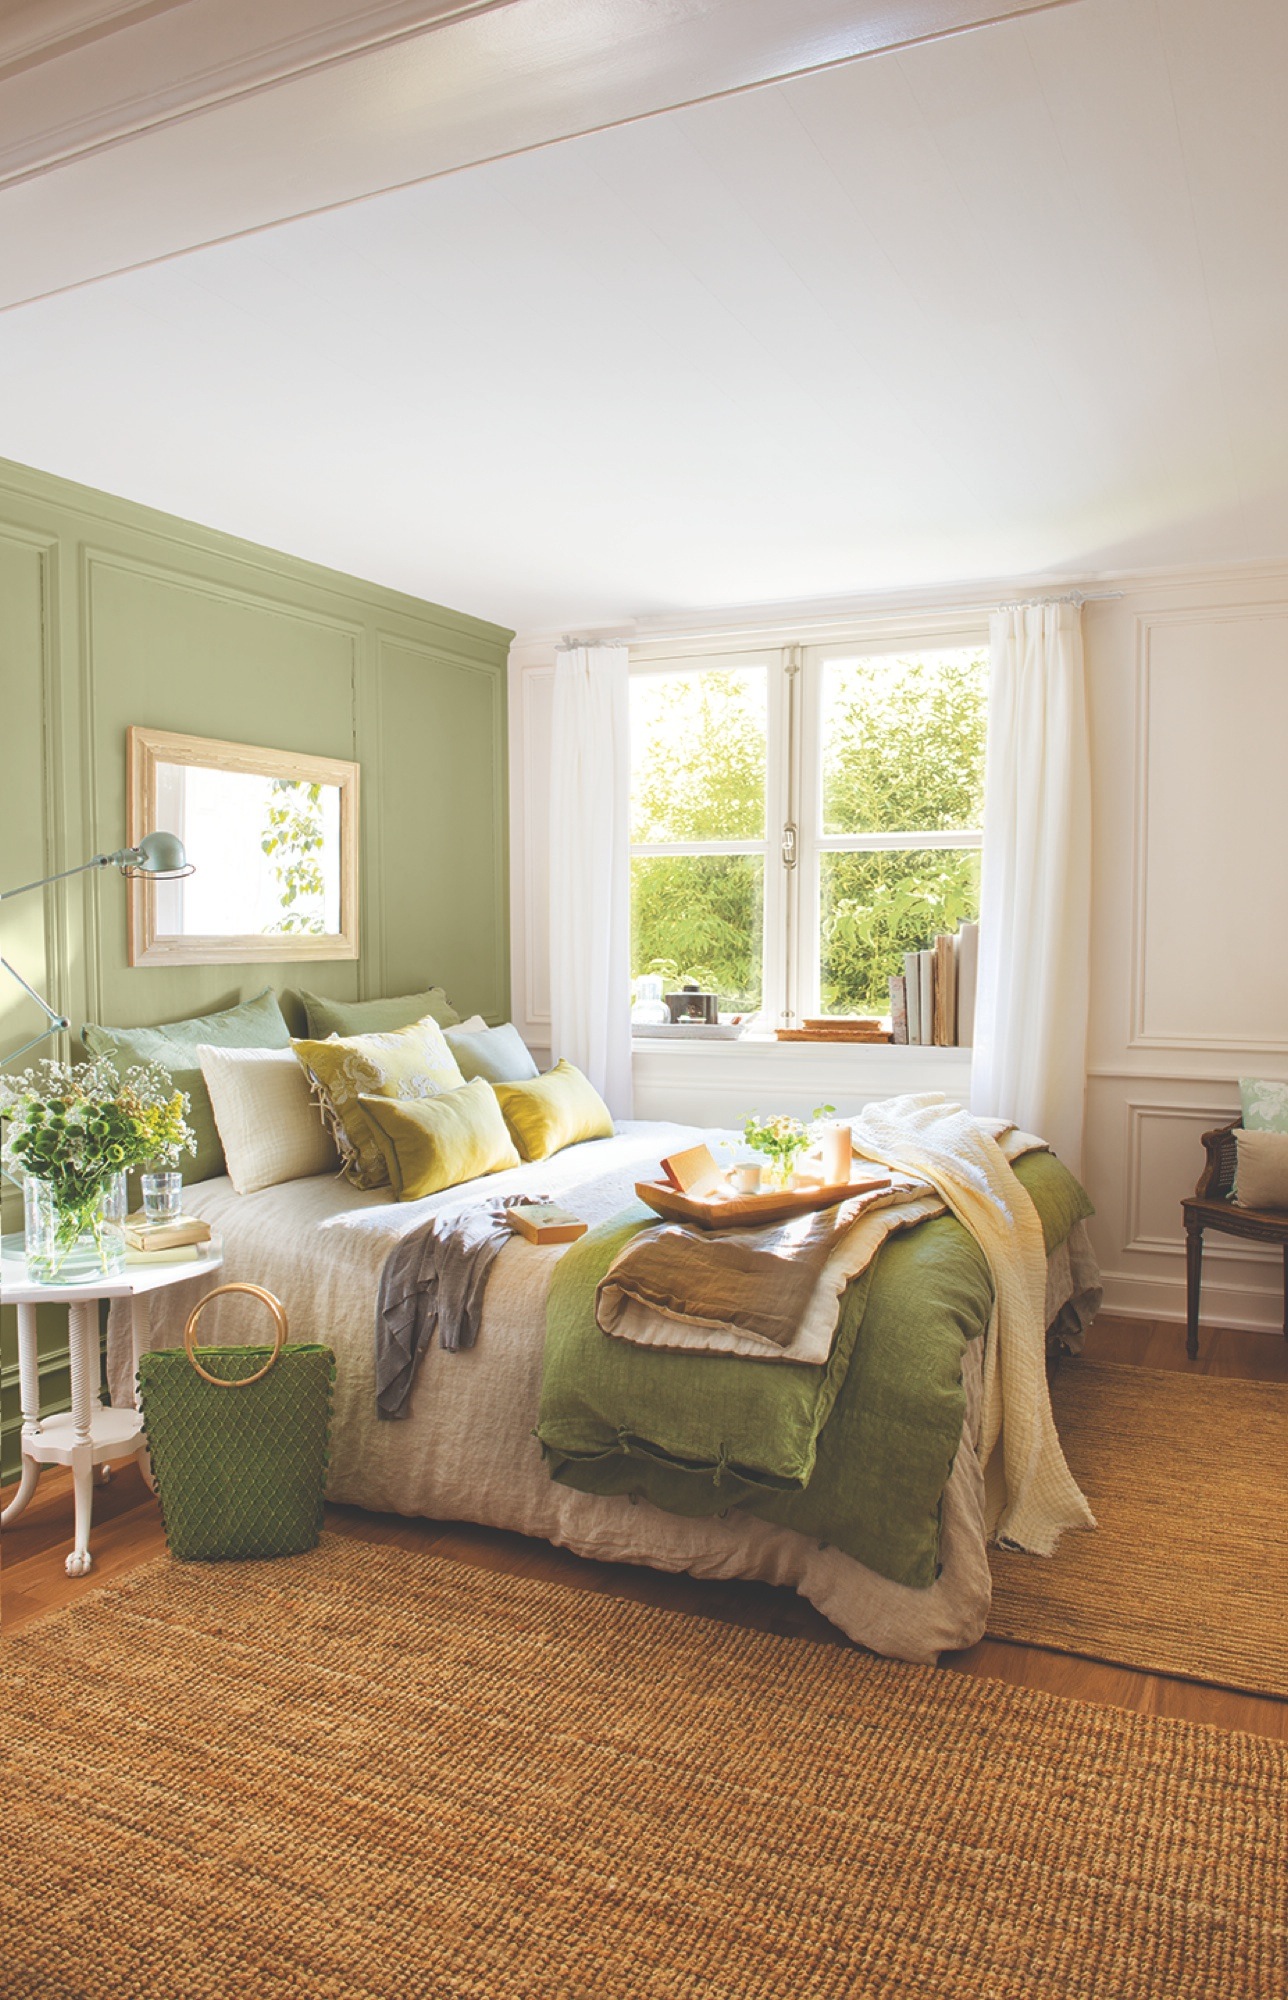 Dormitorio con pared con molduras pintada de verde. 